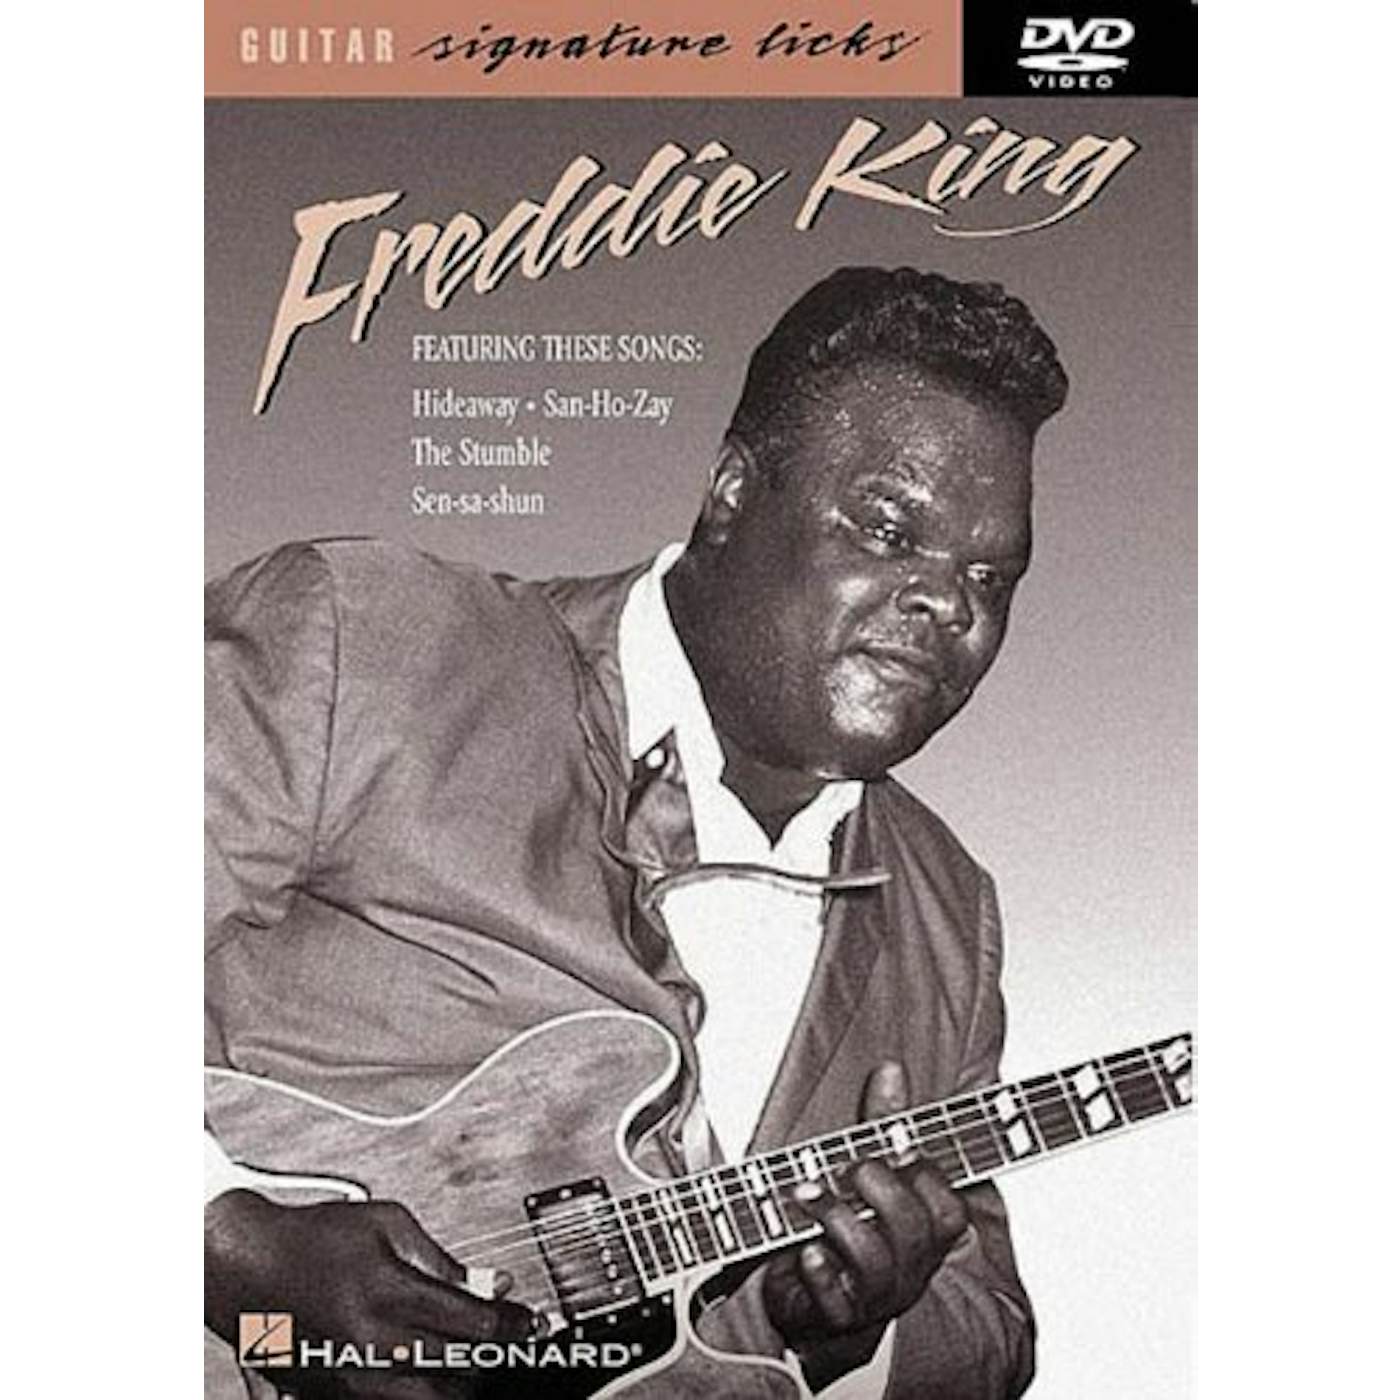 Freddie King GUITAR SIGNATURE LICKS DVD